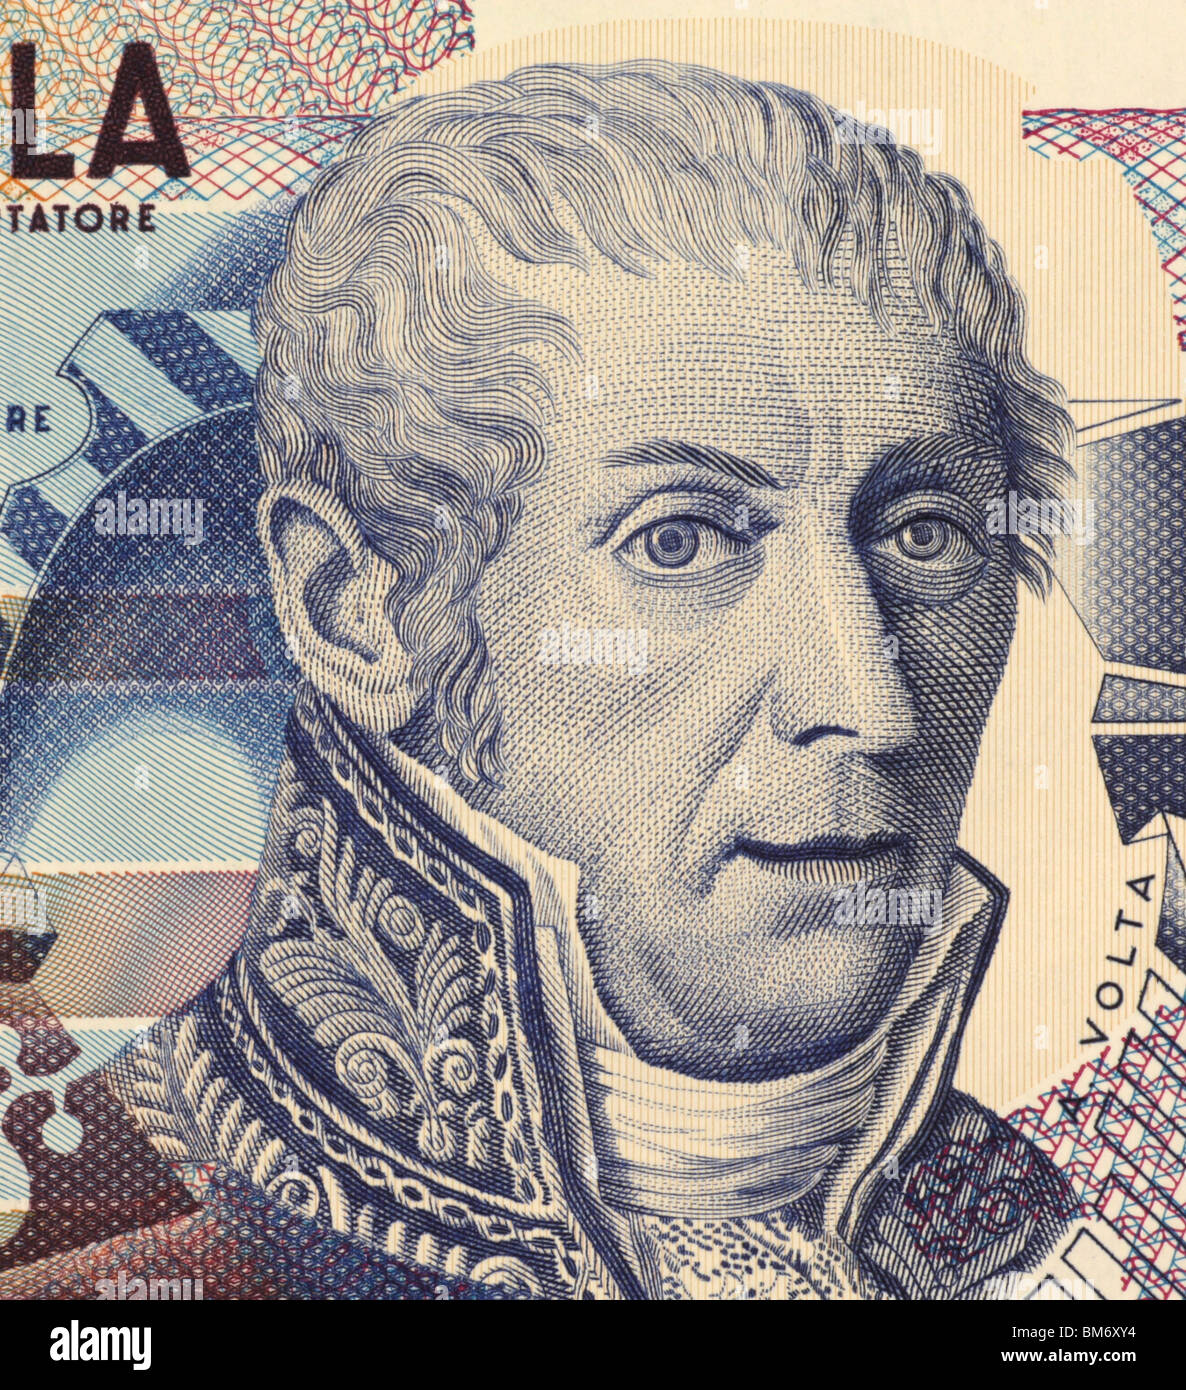 Alessandro Volta (1745-1827) on 10000 Lire 1984 Banknote from Italy. Italian physicist. Stock Photo